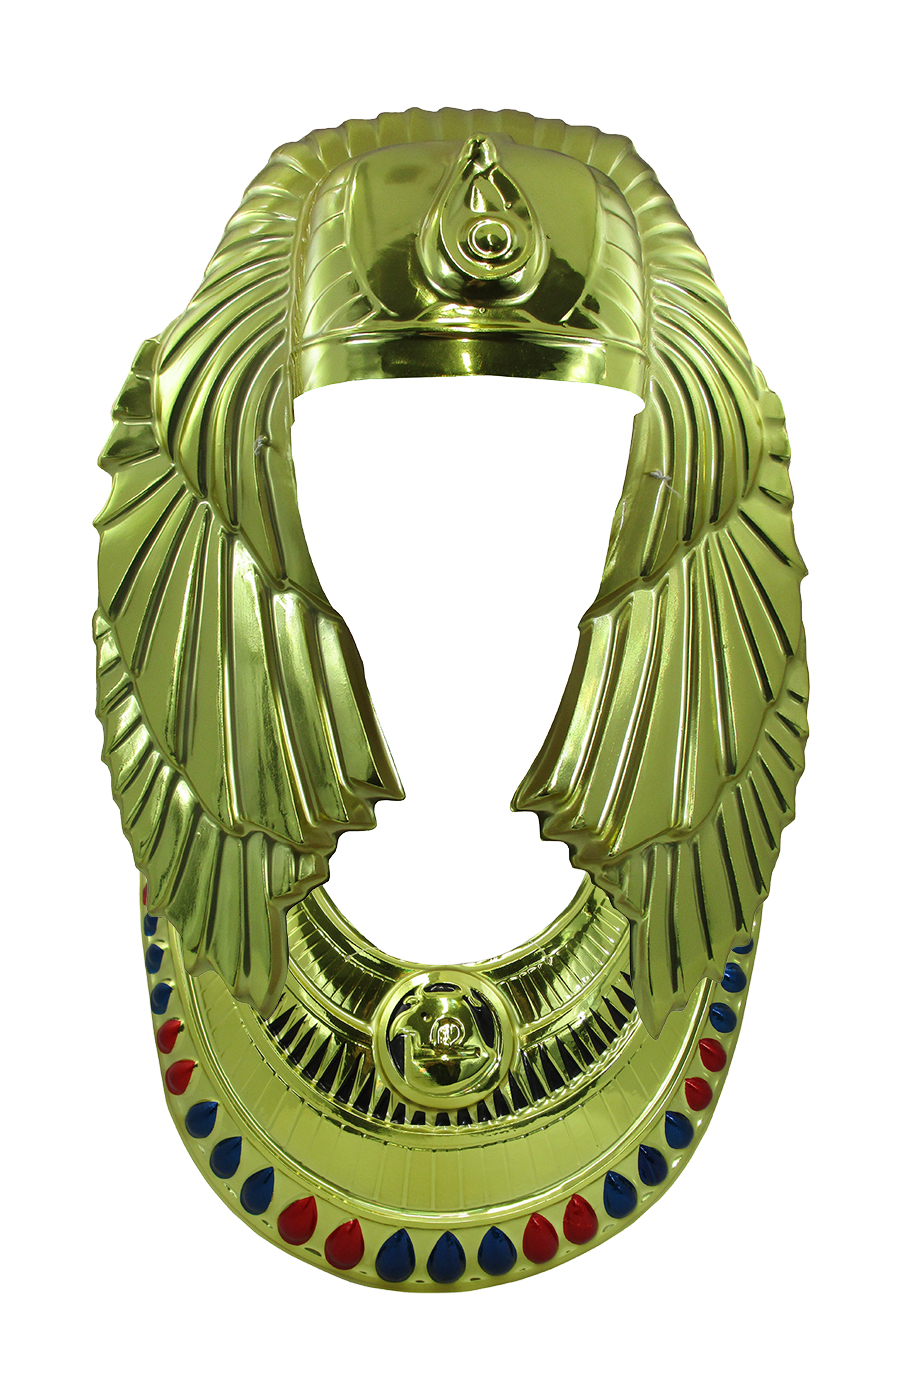 Adult Mens King Tut Headpiece Neck Piece Egyptian Male Pharoah Costume Accessory 680196911085 Ebay